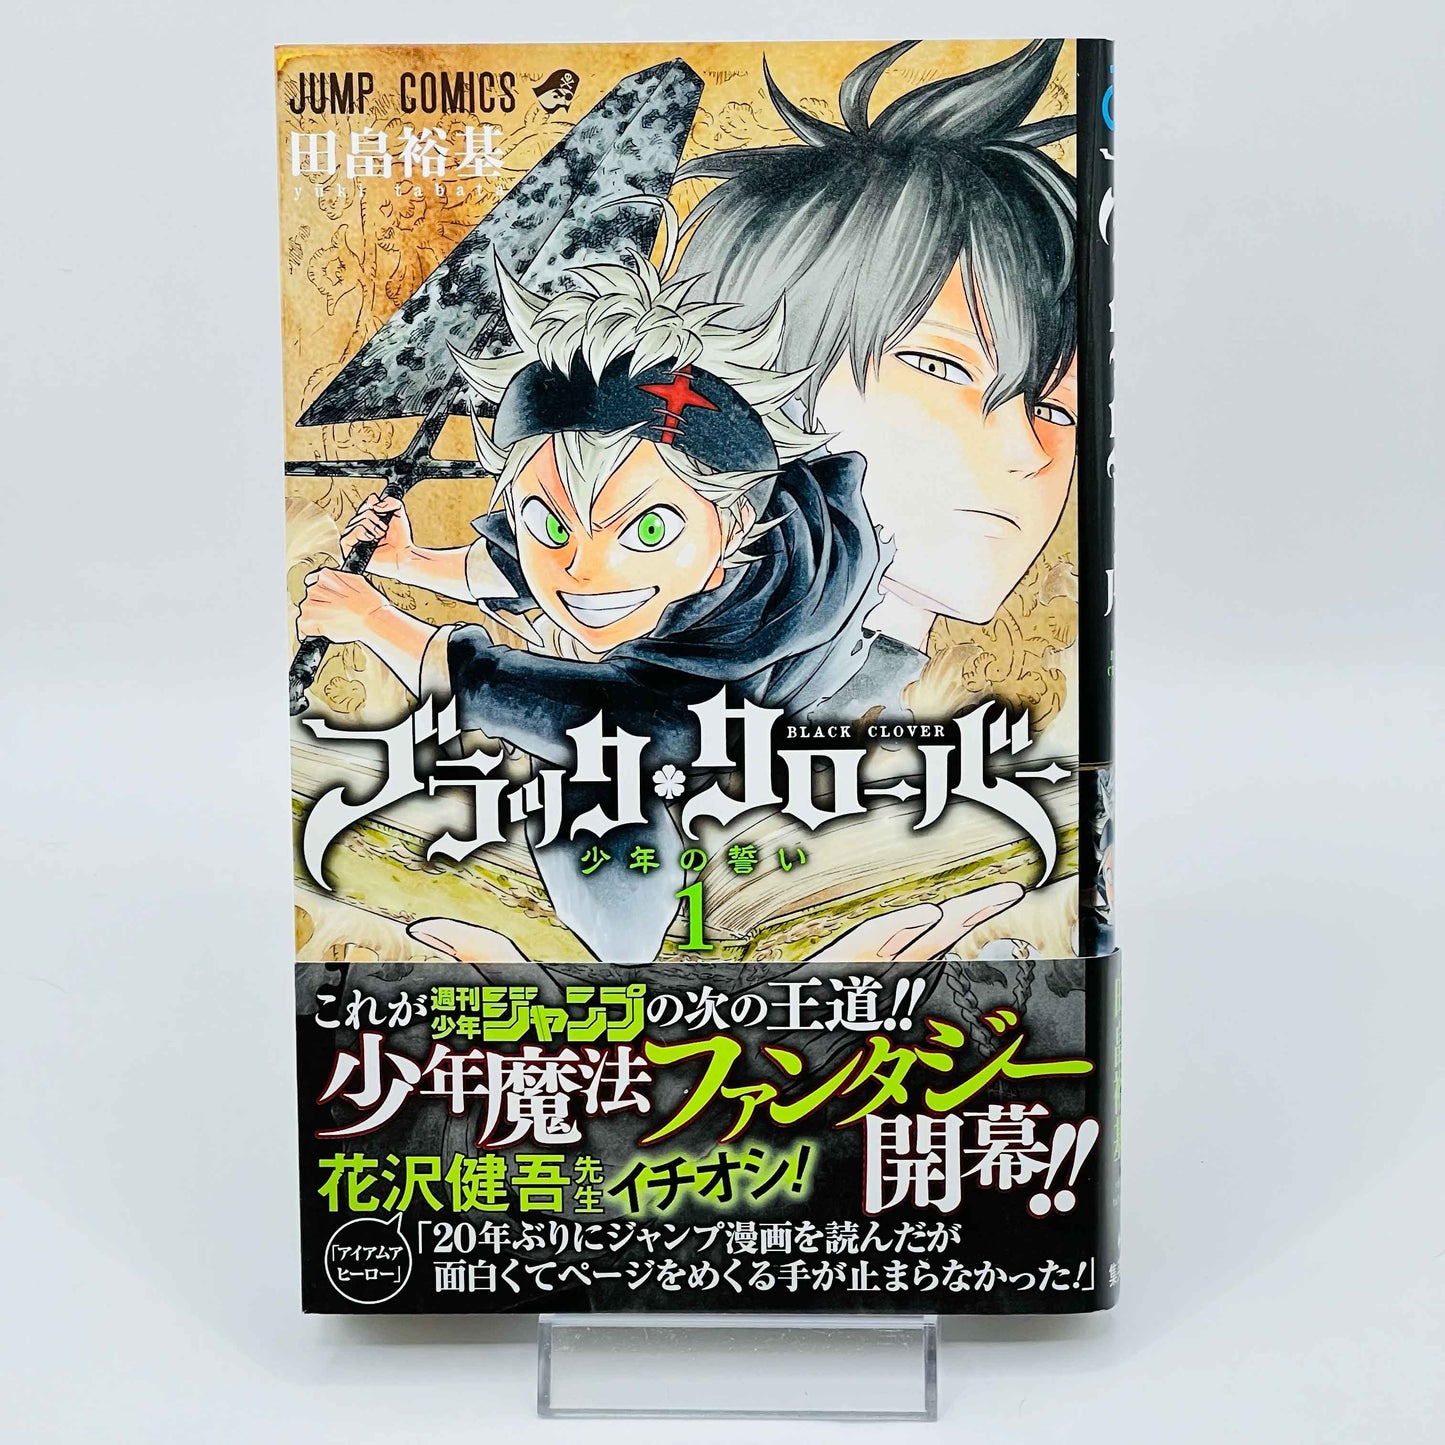 Black Clover - Volume 01 /w Obi - 1stPrint.net - 1st First Print Edition Manga Store - M-BLACKCLOVER-01-007